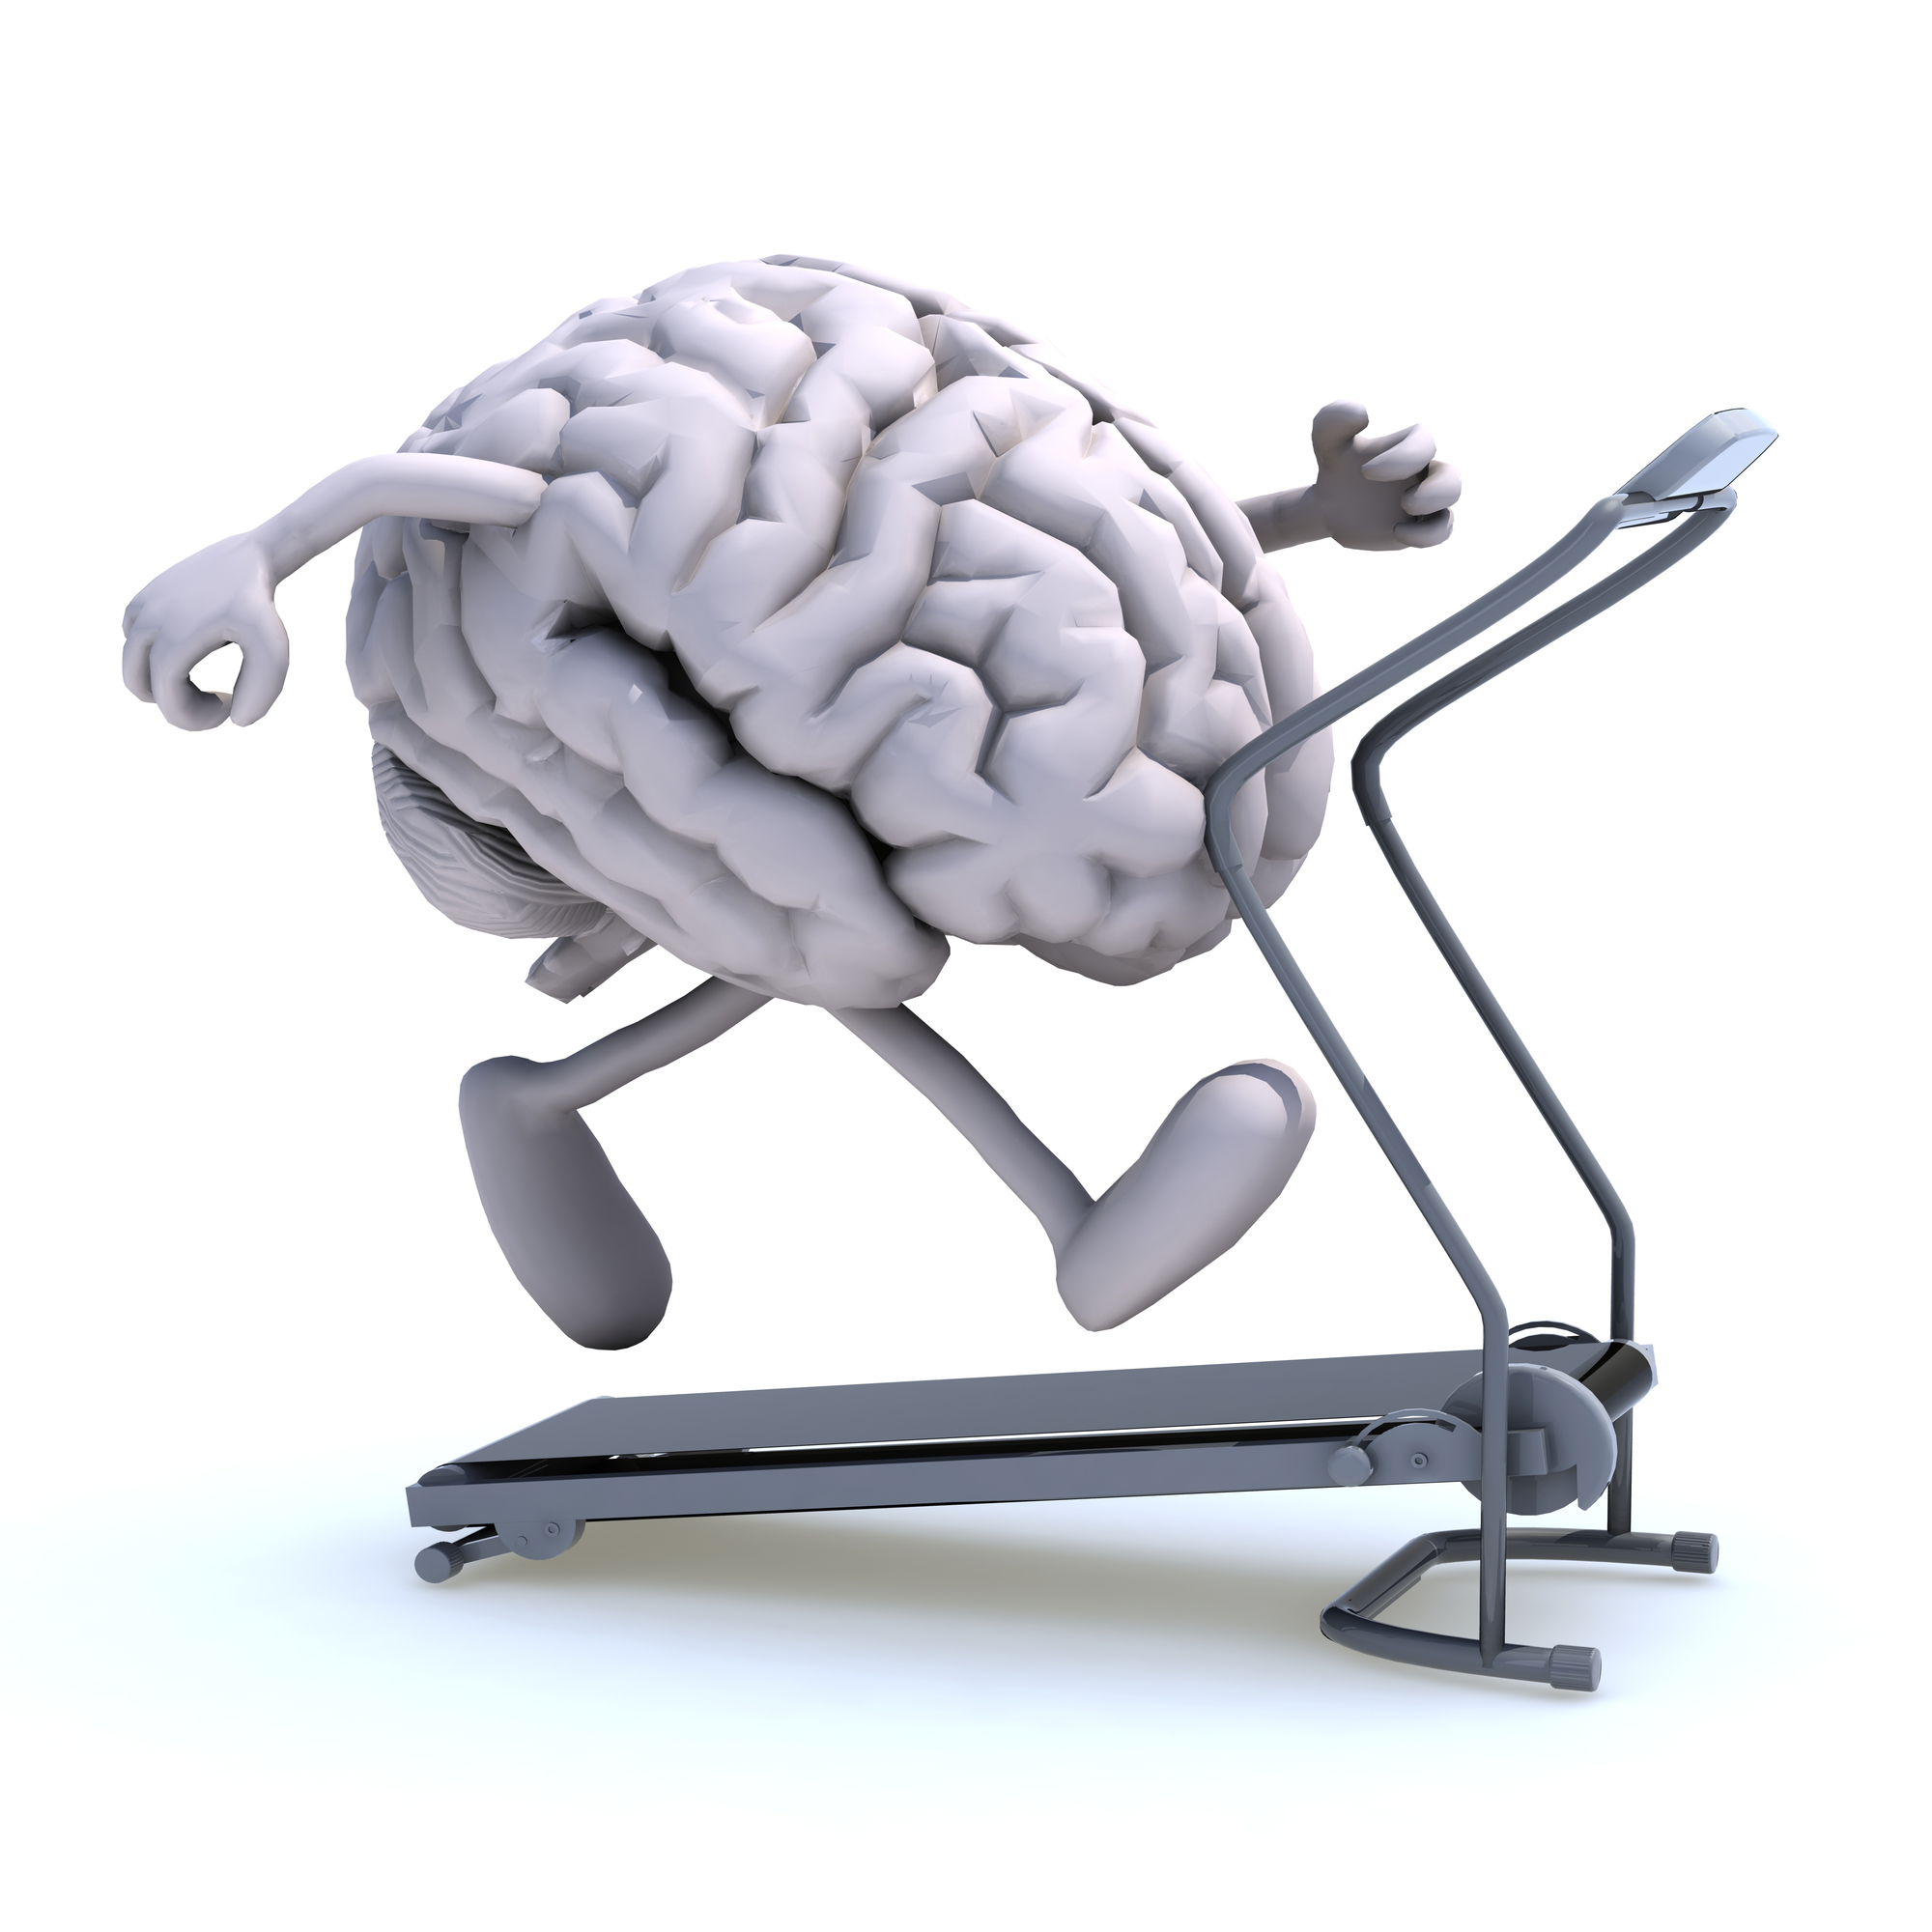 Grey brain with legs mid-stride jogging on treadmill